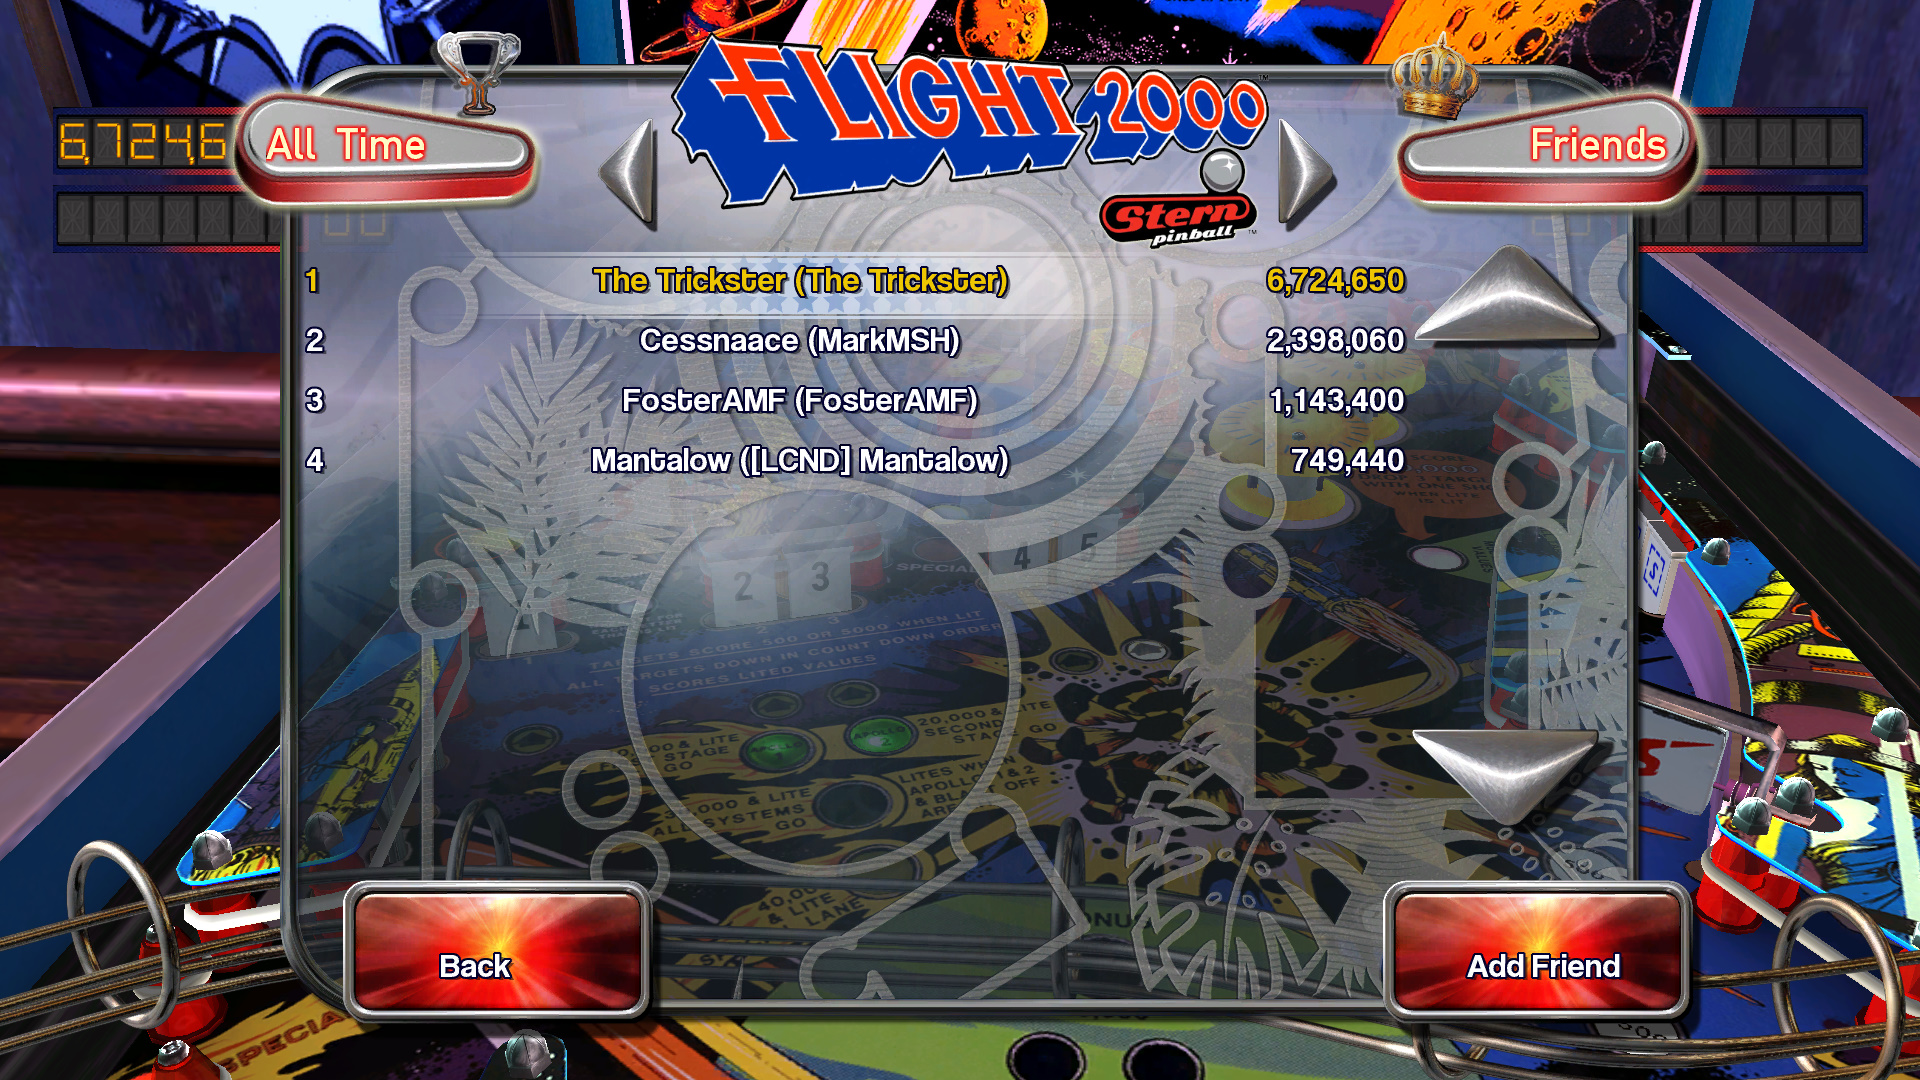 TheTrickster: Pinball Arcade: Flight 2000 (PC) 6,724,650 points on 2015-09-22 04:10:14